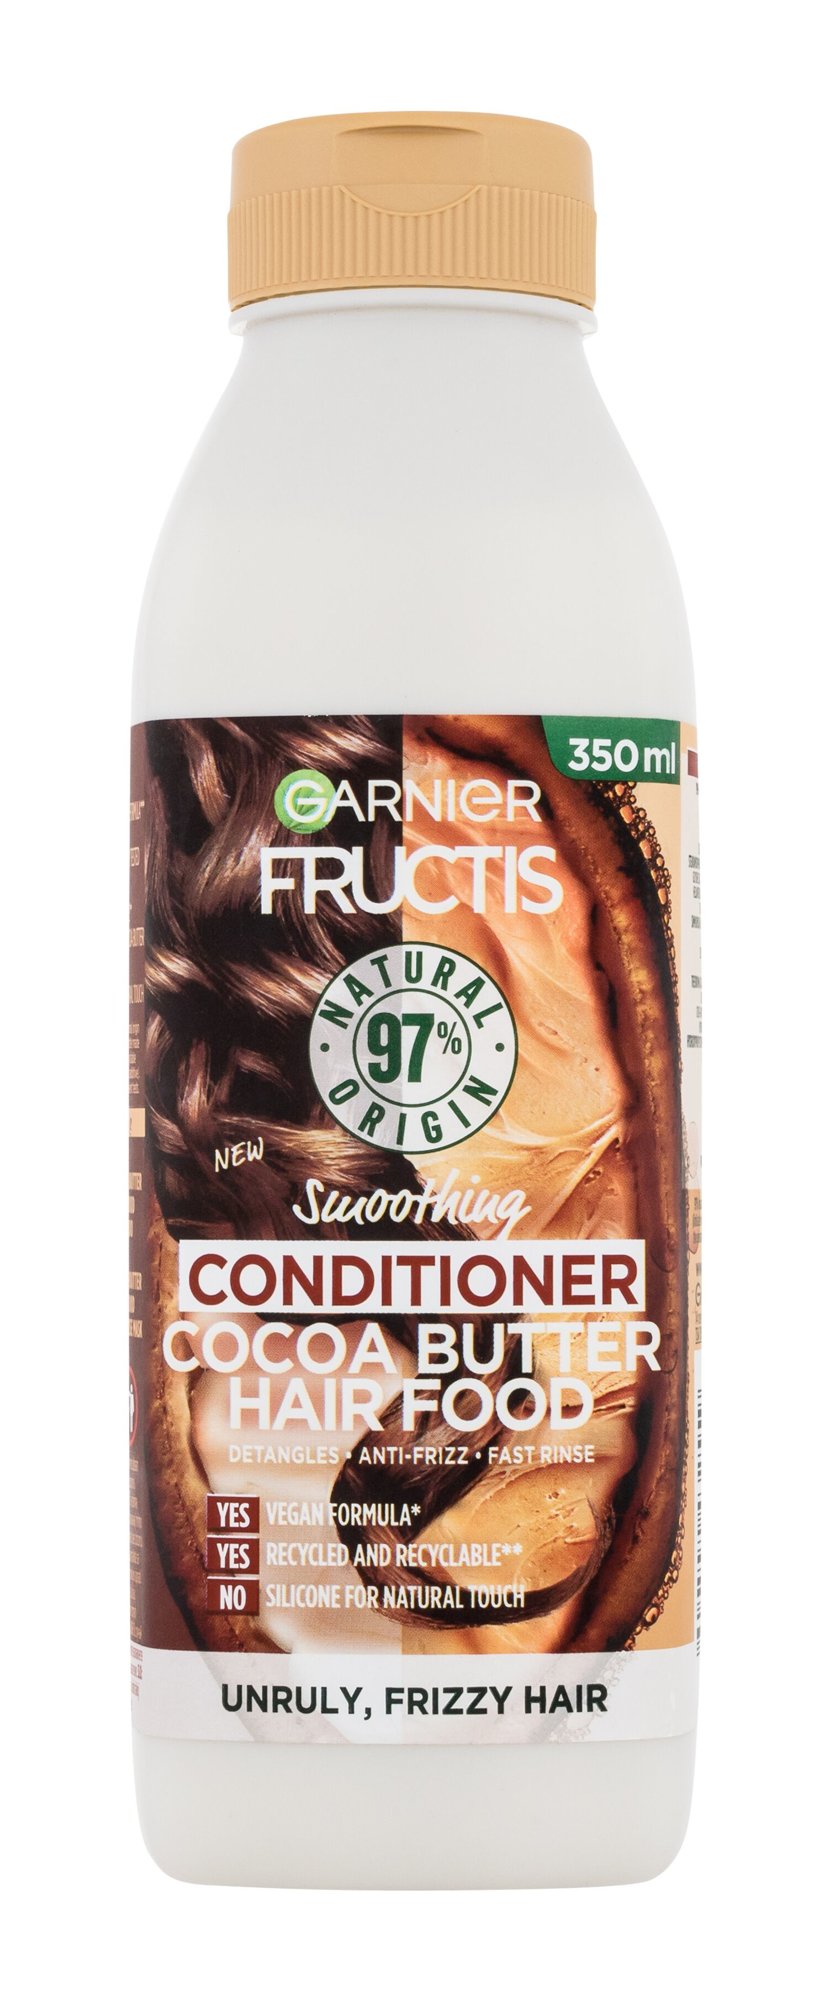 Garnier Fructis Hair Food Cocoa Butter kondicionierius